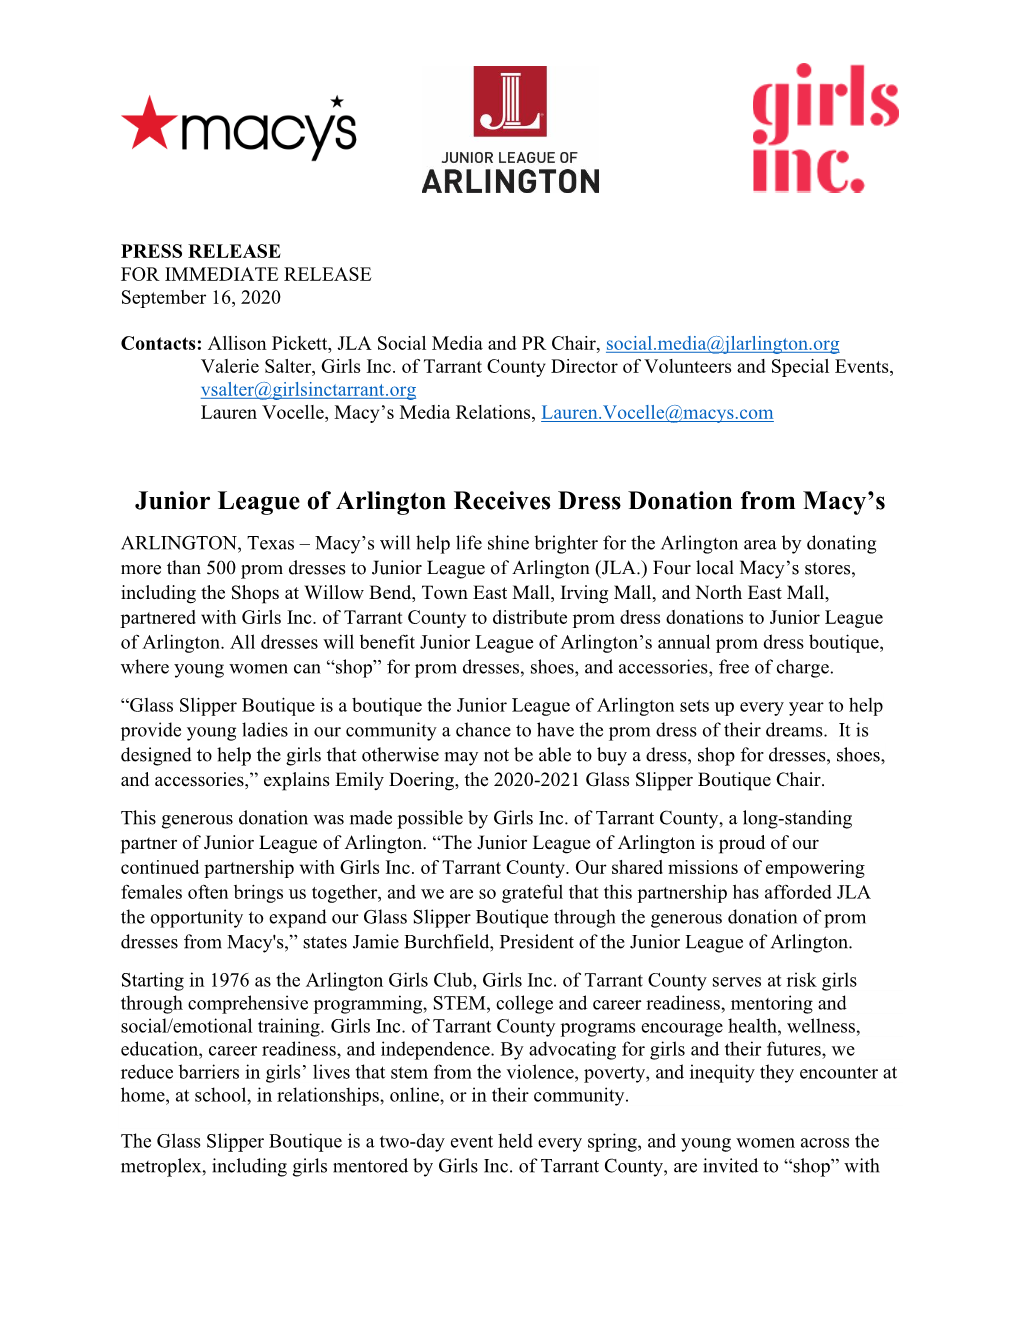 Junior League of Arlington Receives Dress Donation from Macy's